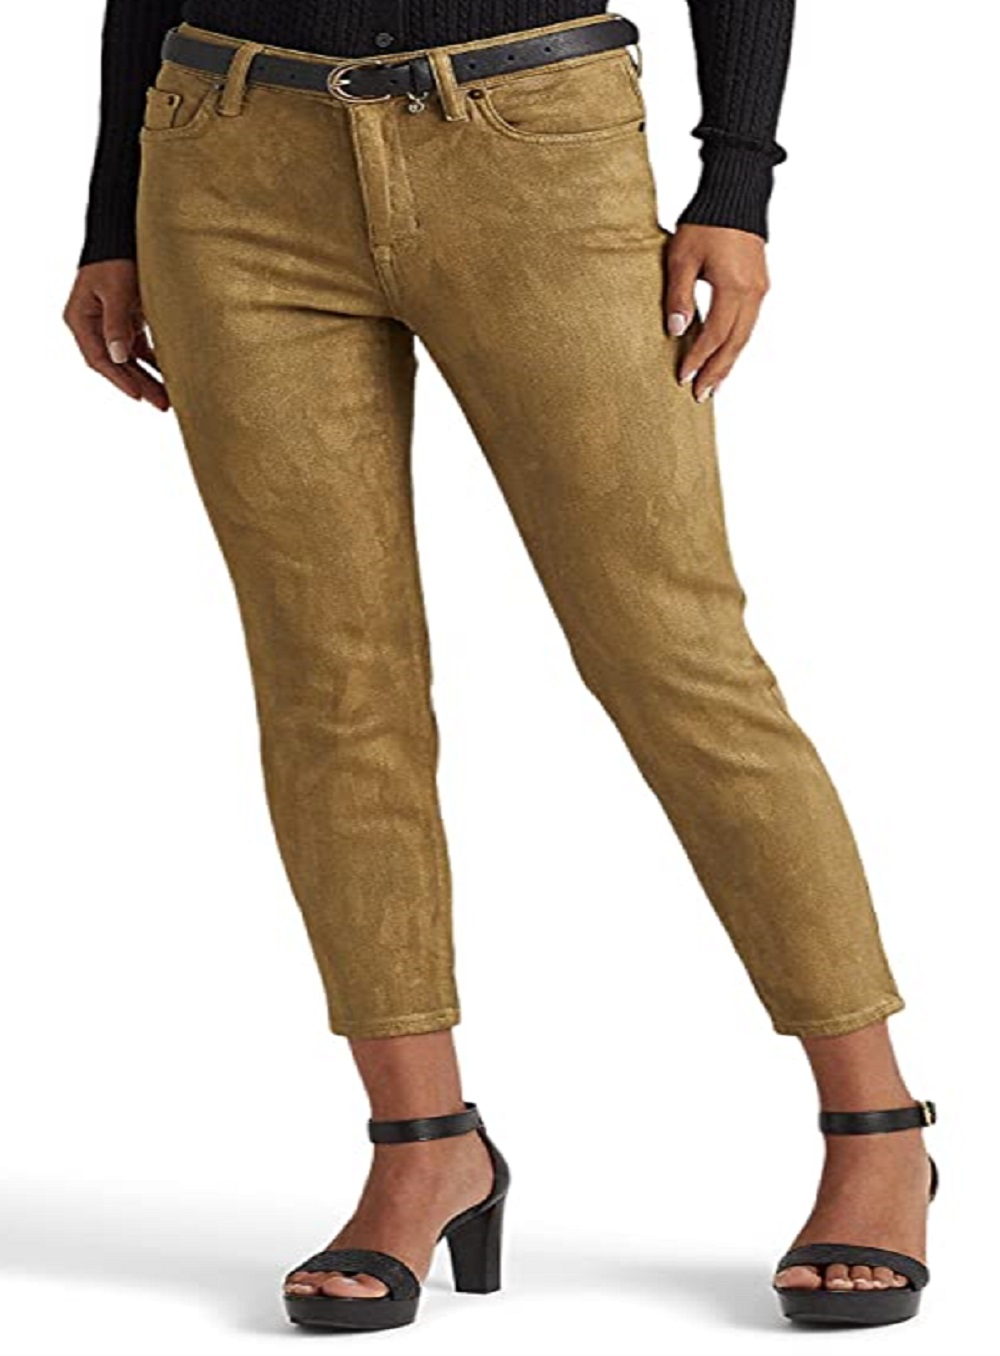 Ralph Lauren Women's High Rise Skinny Ankle Jeans Green Size 8Petite